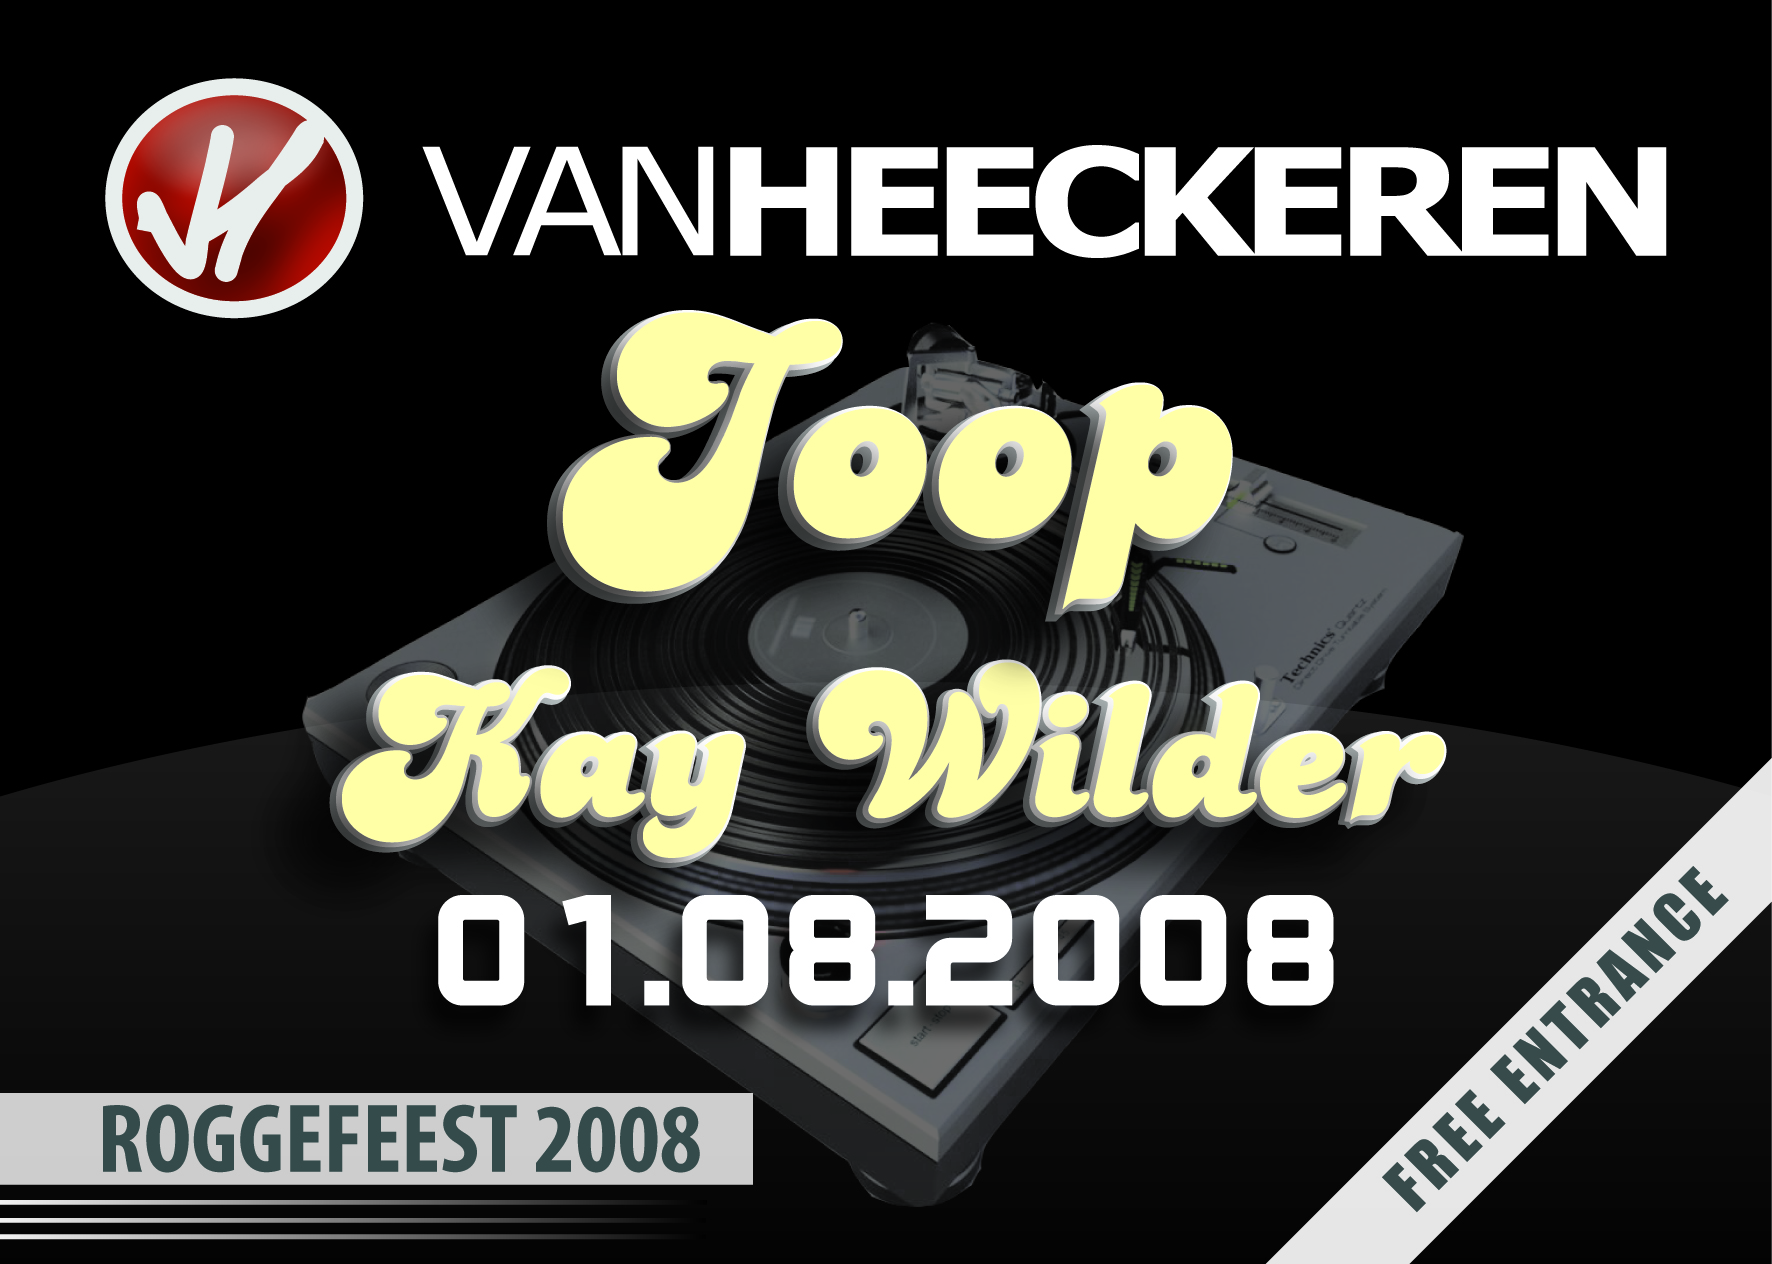 Roggefeest 2008 - Joop Kay Wilder